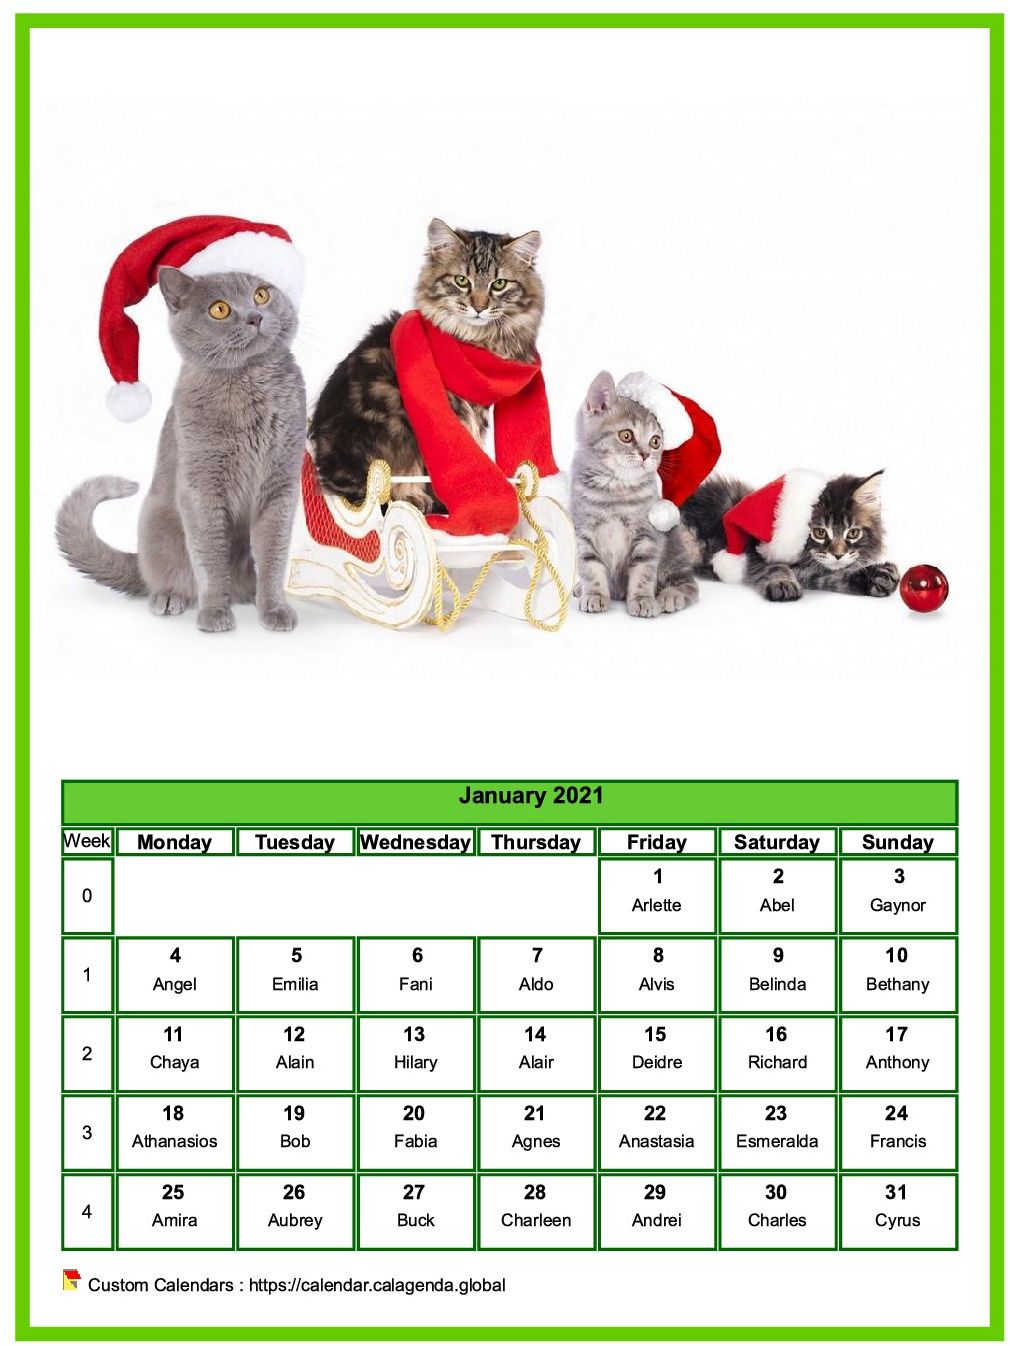 Calendar January 2021 cats